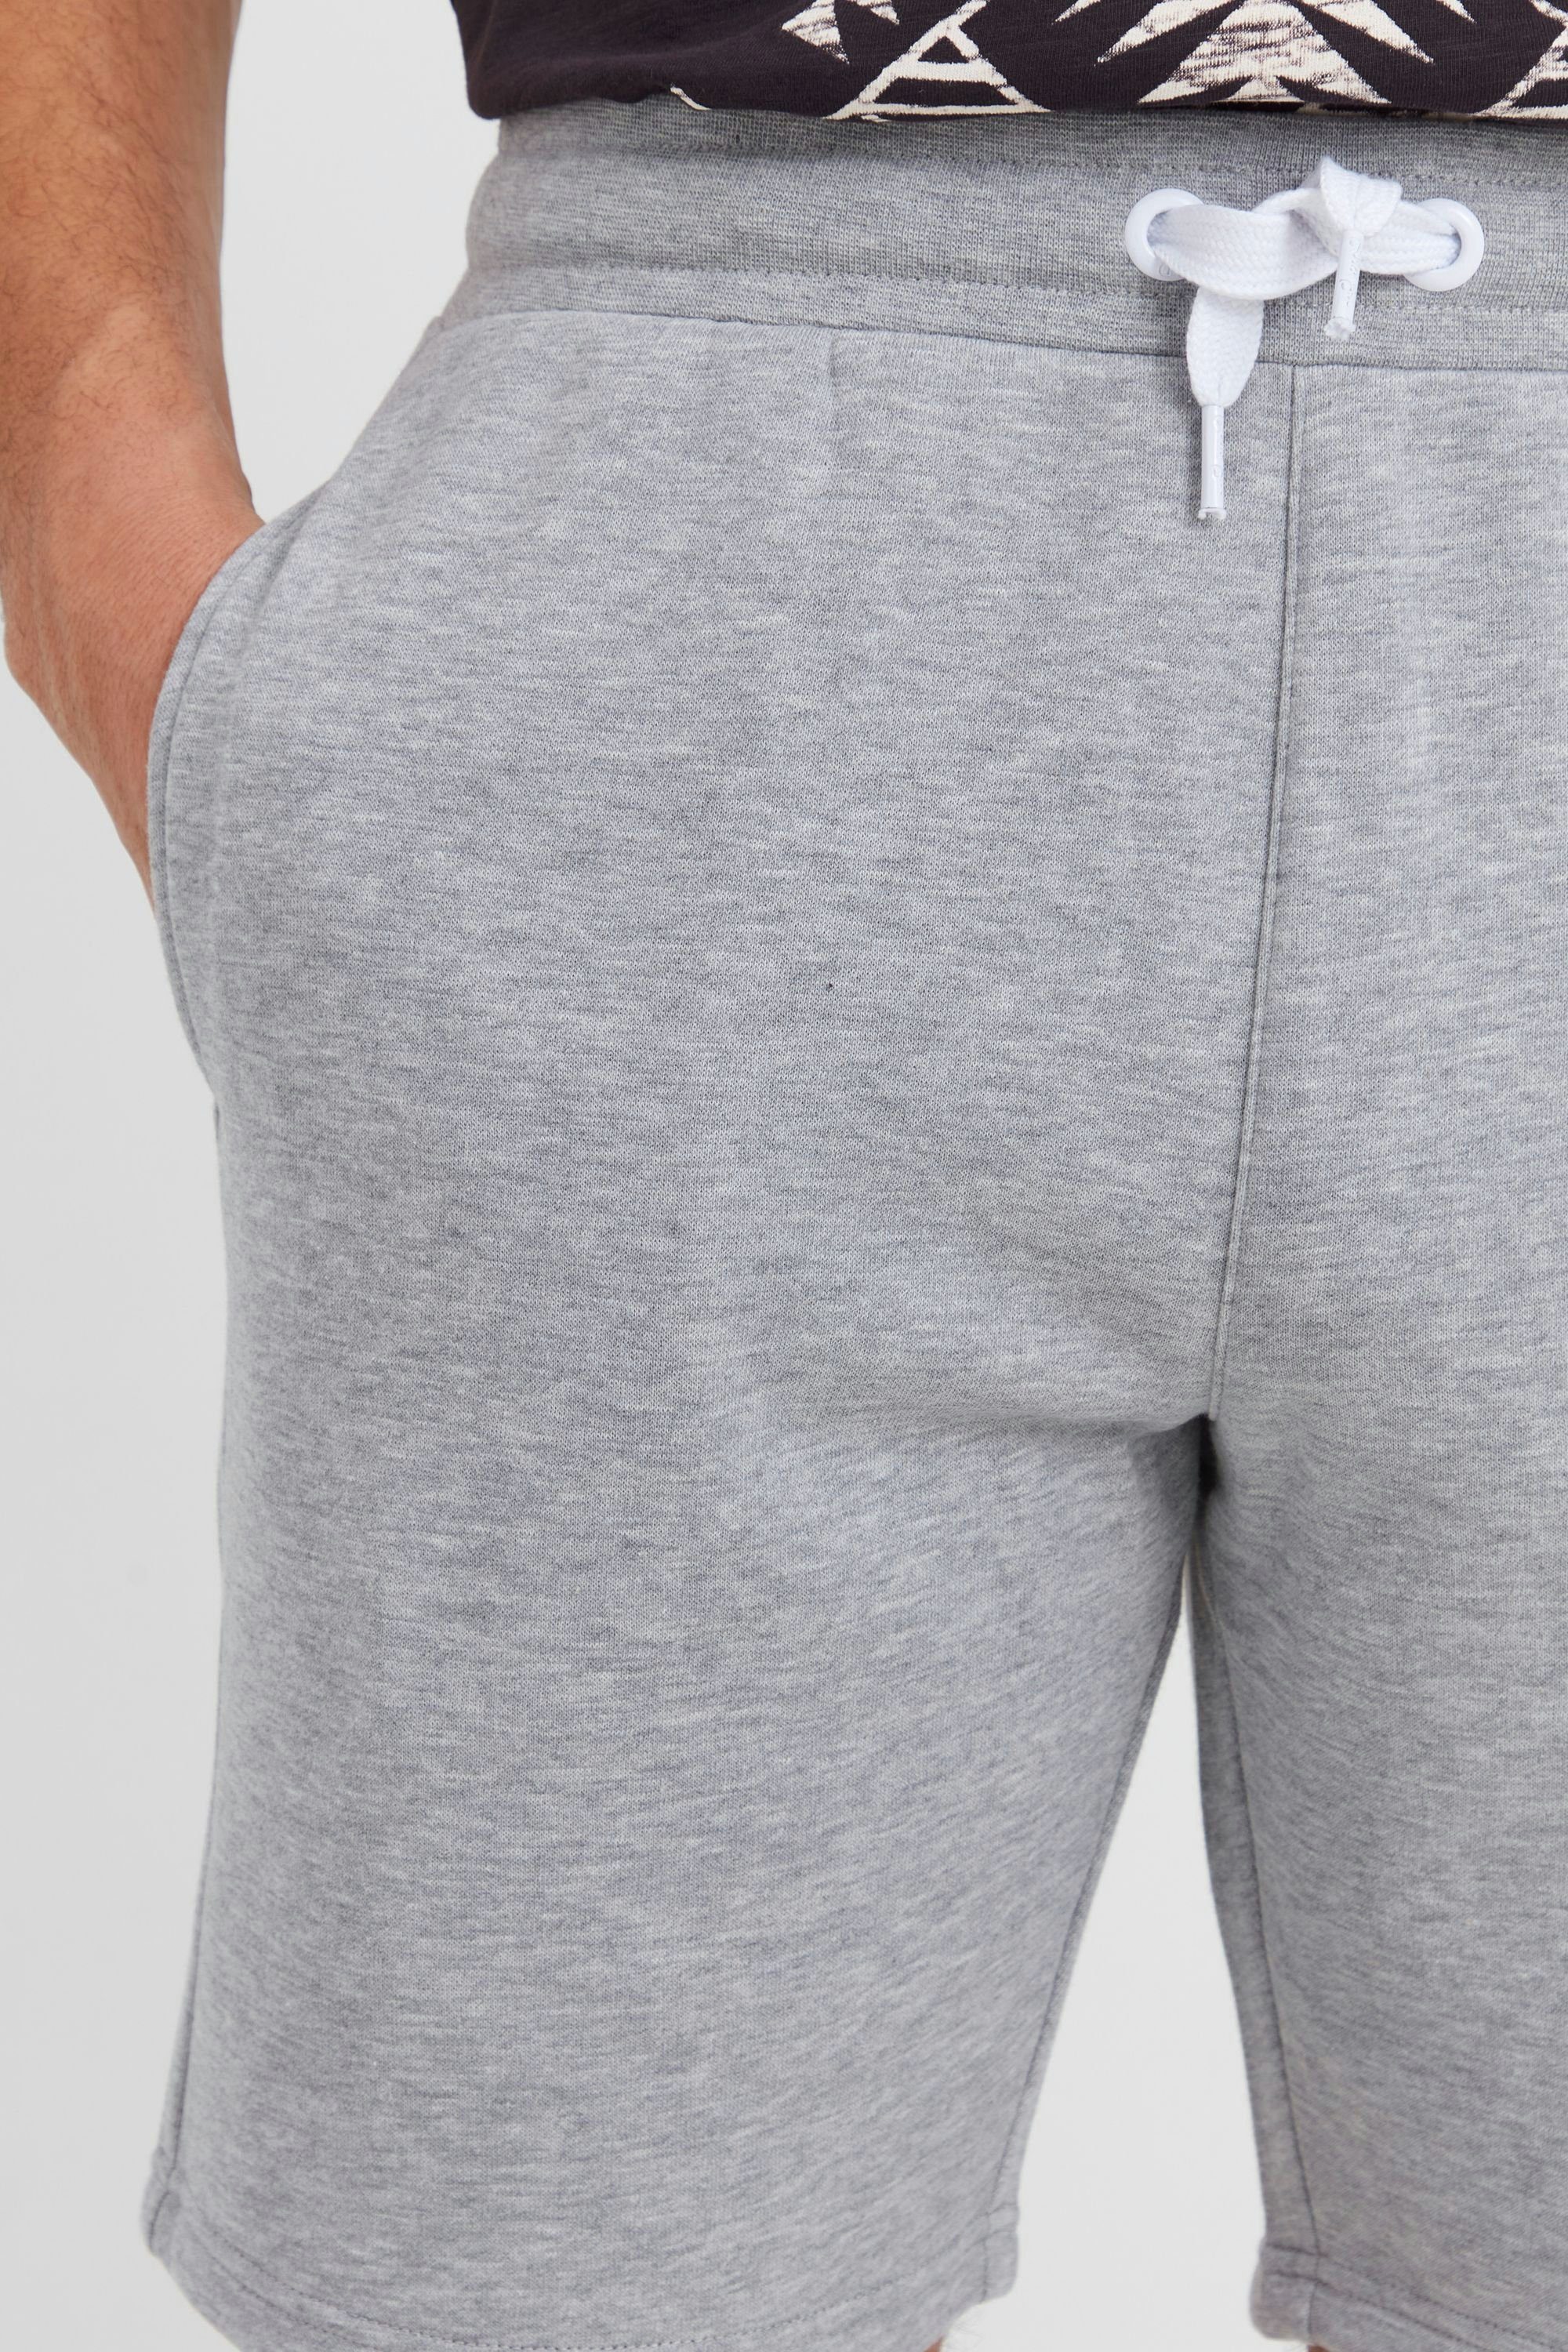 Solid Sweatshorts SDOliver Basic Kordeln Sweat Grey mit Light (1541011) Shorts Melange